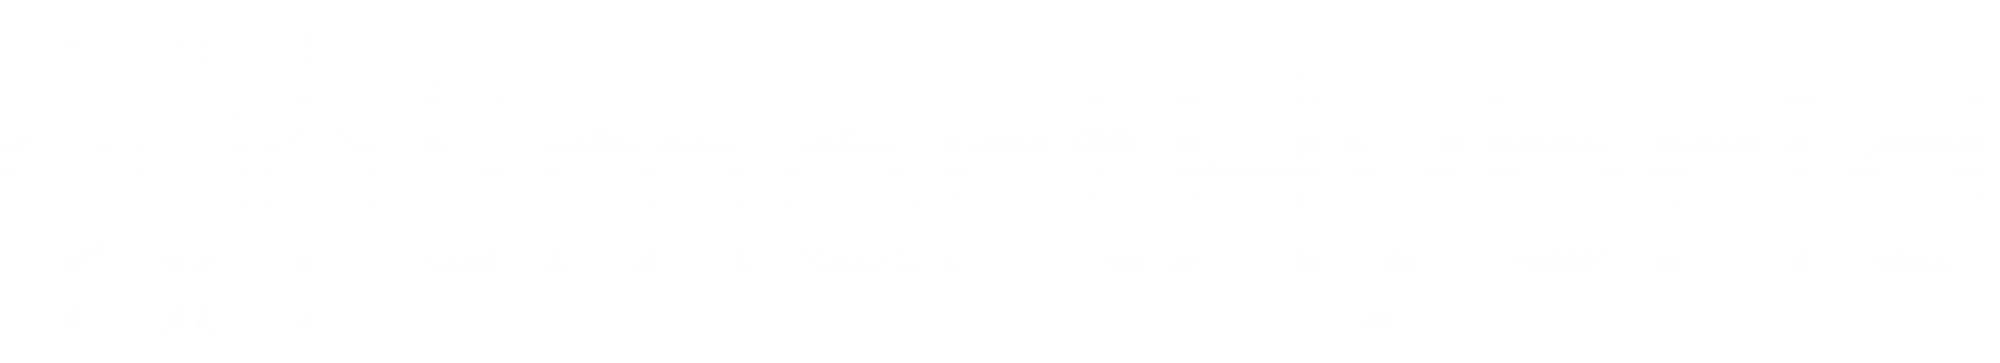 logo-smarthybrid